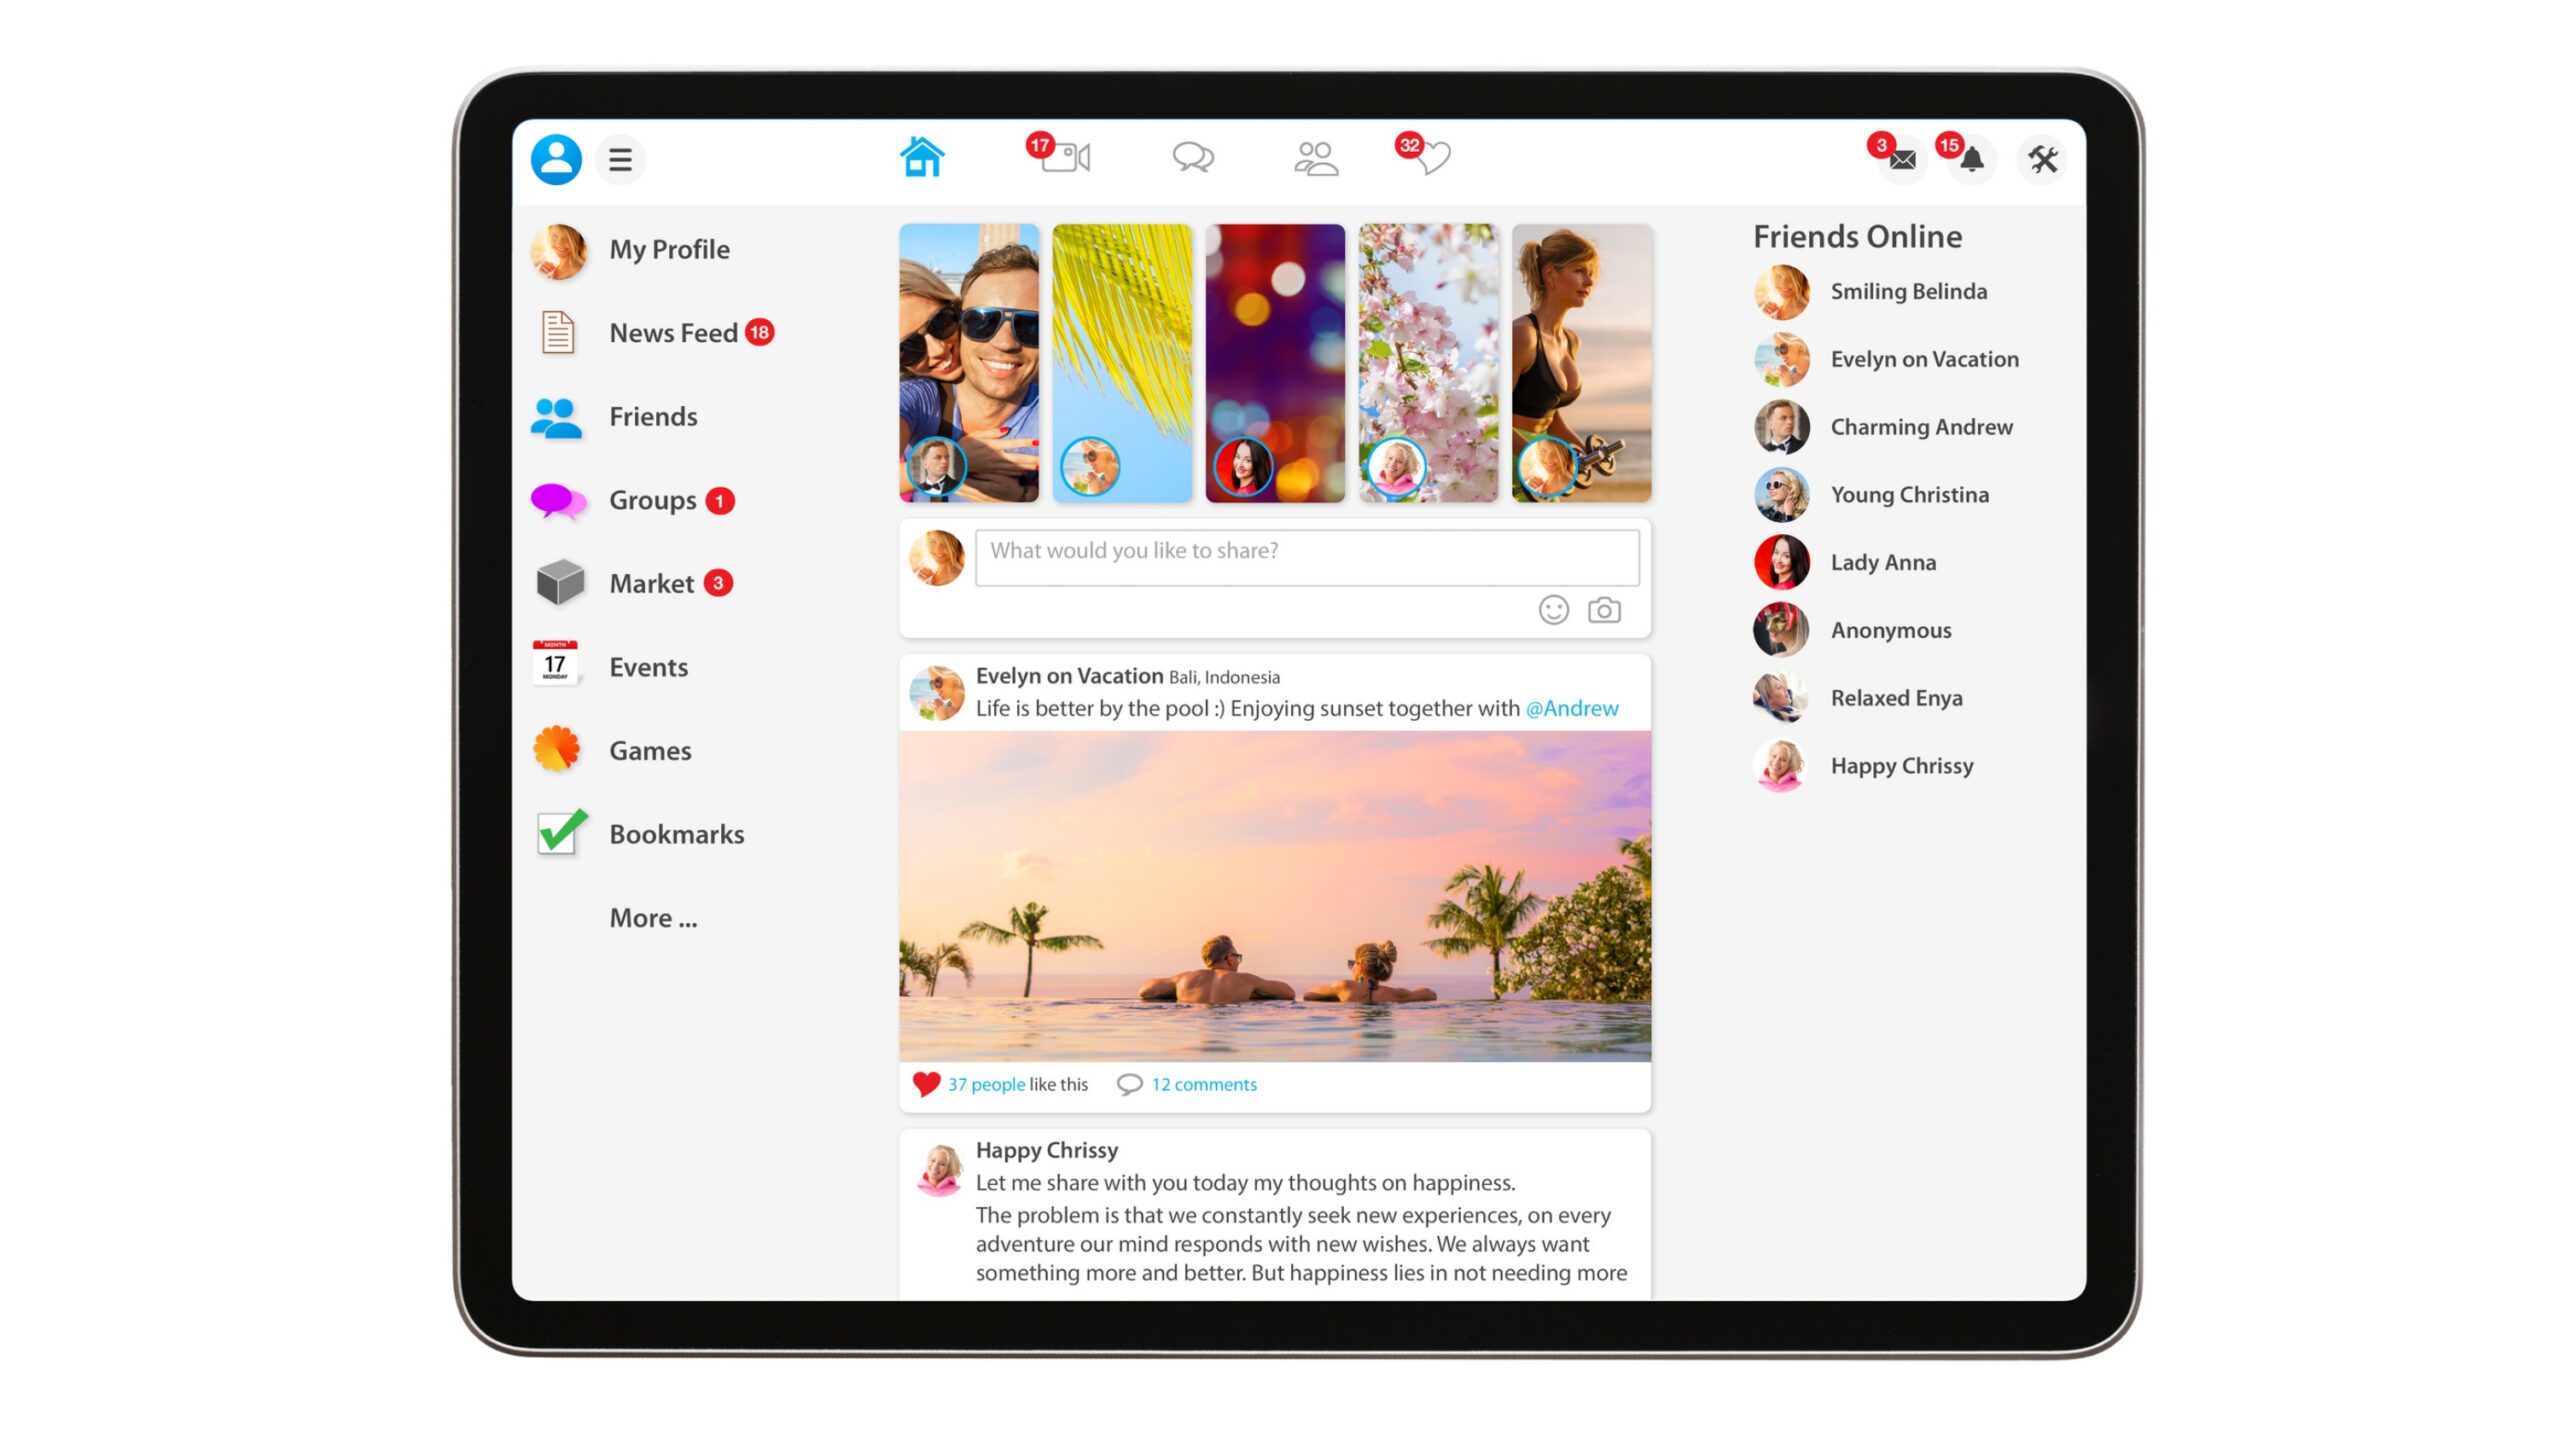 Tablet frame displaying social media Facebook interface